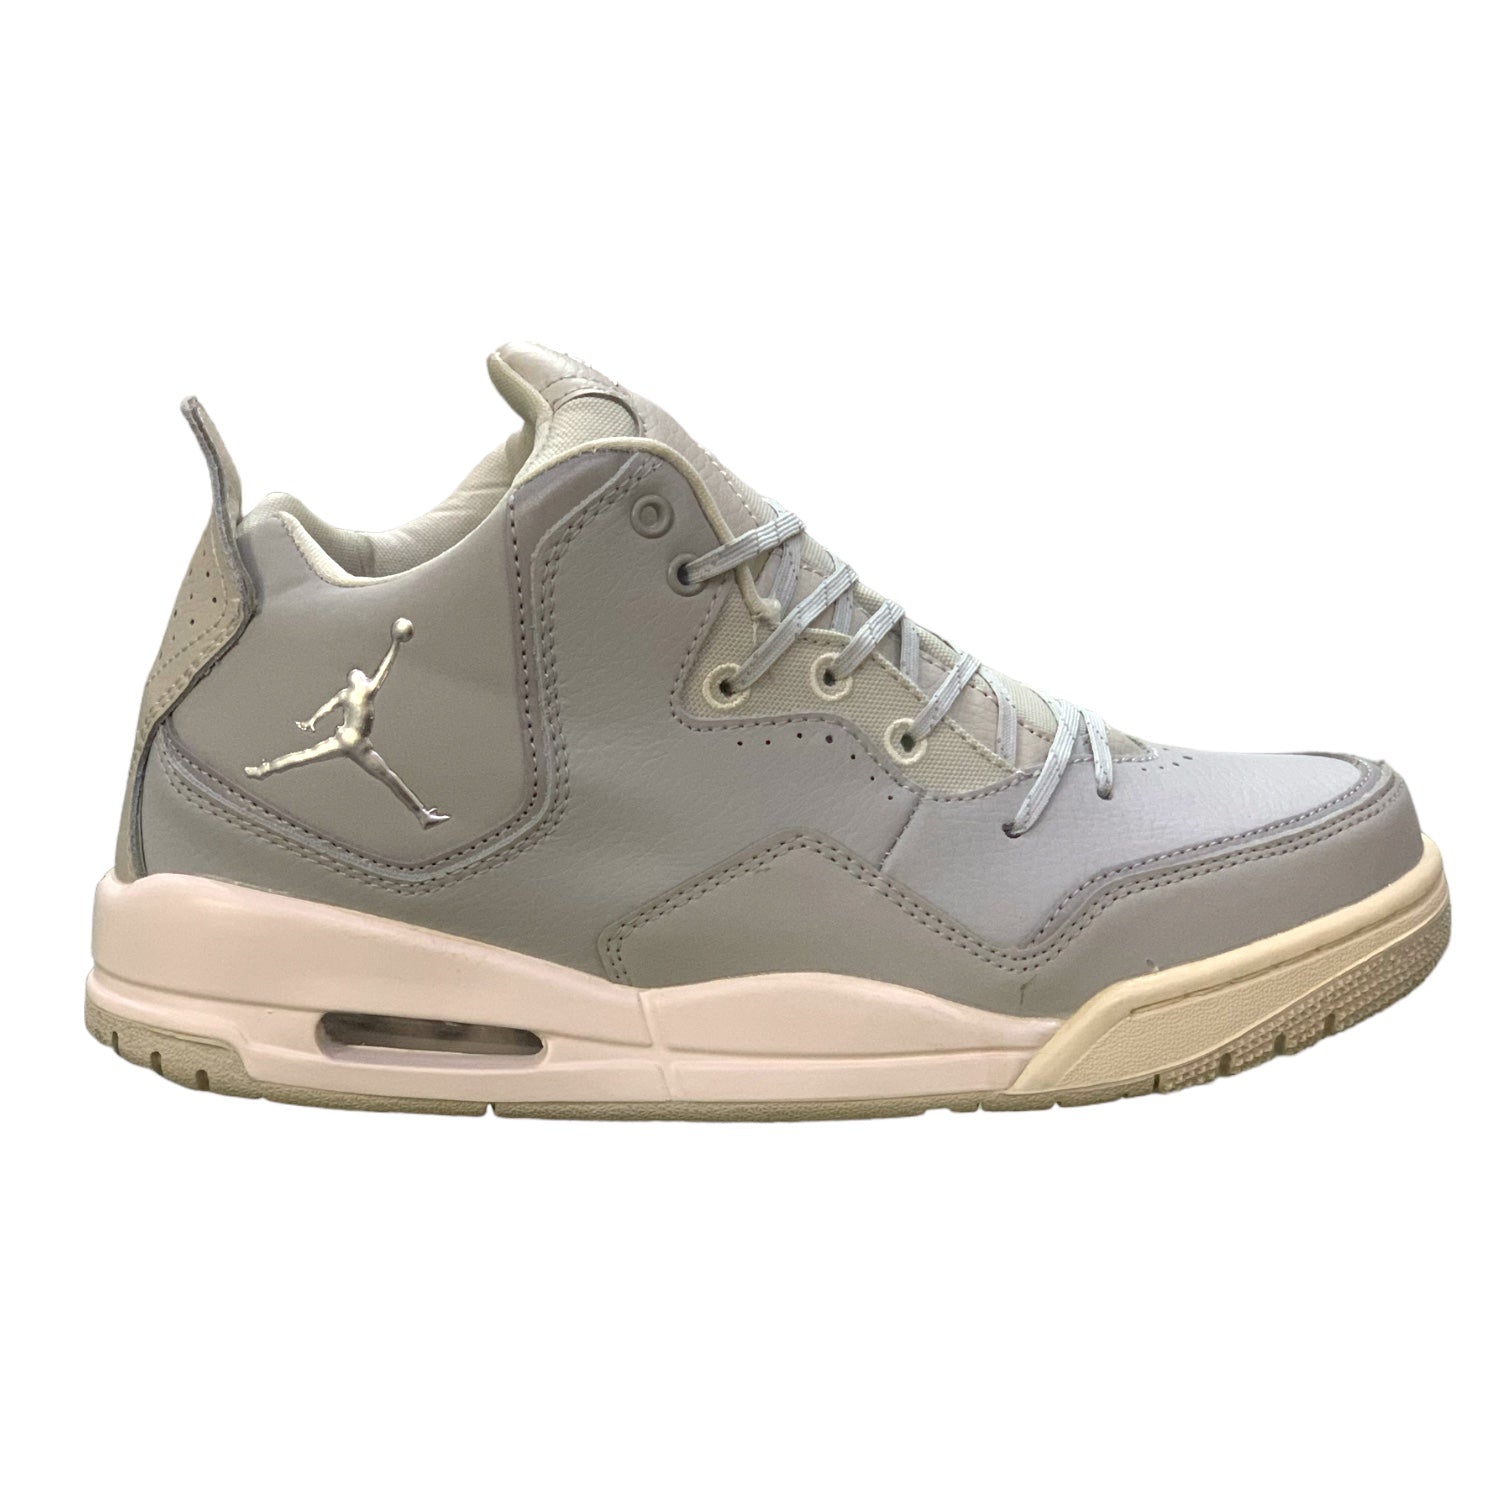 Nike Air Jordan Courtside 23 ”Grey Fog” (Dot Perfect)